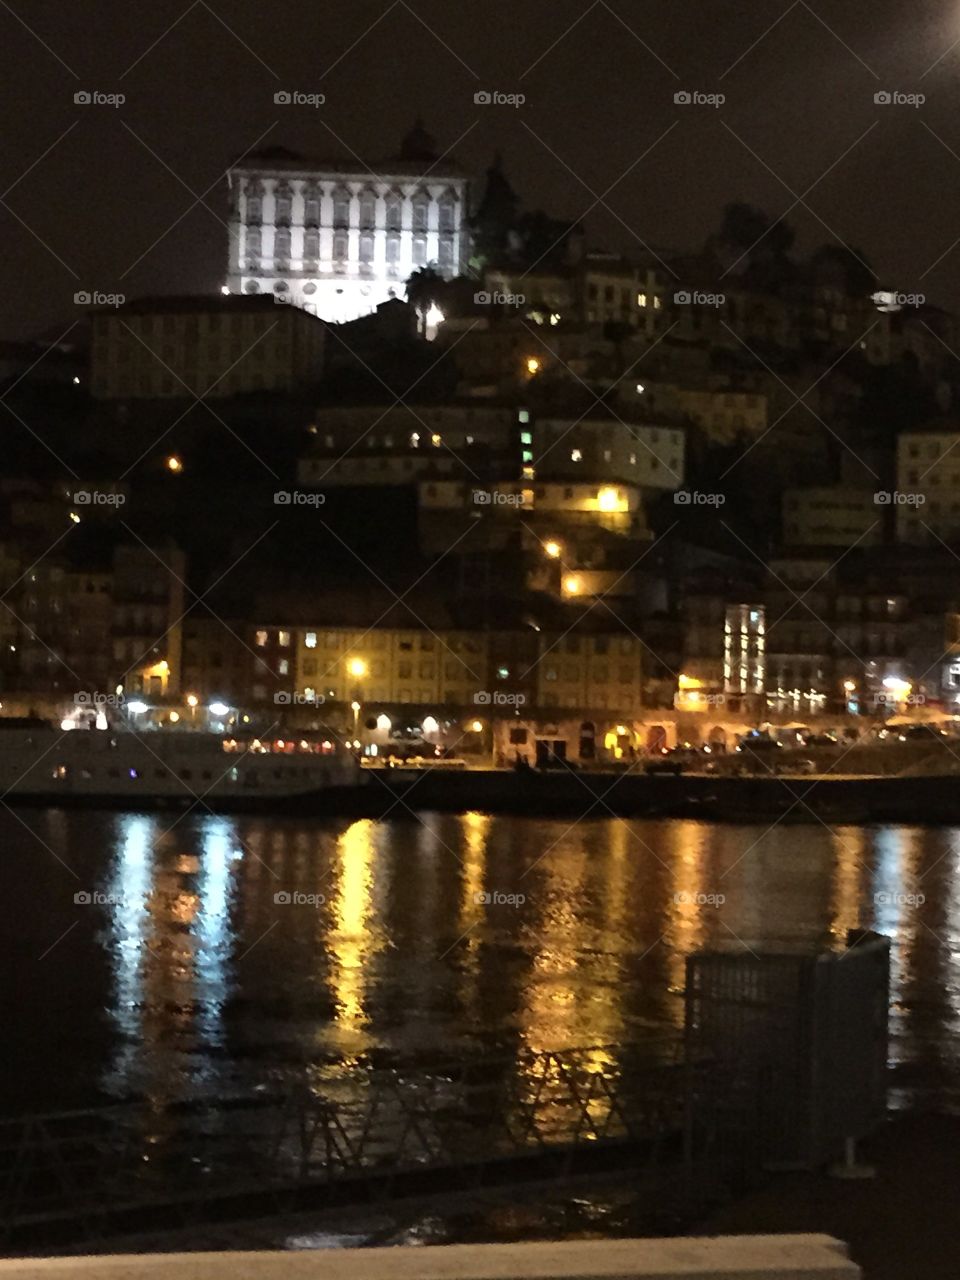 Lights of Porto